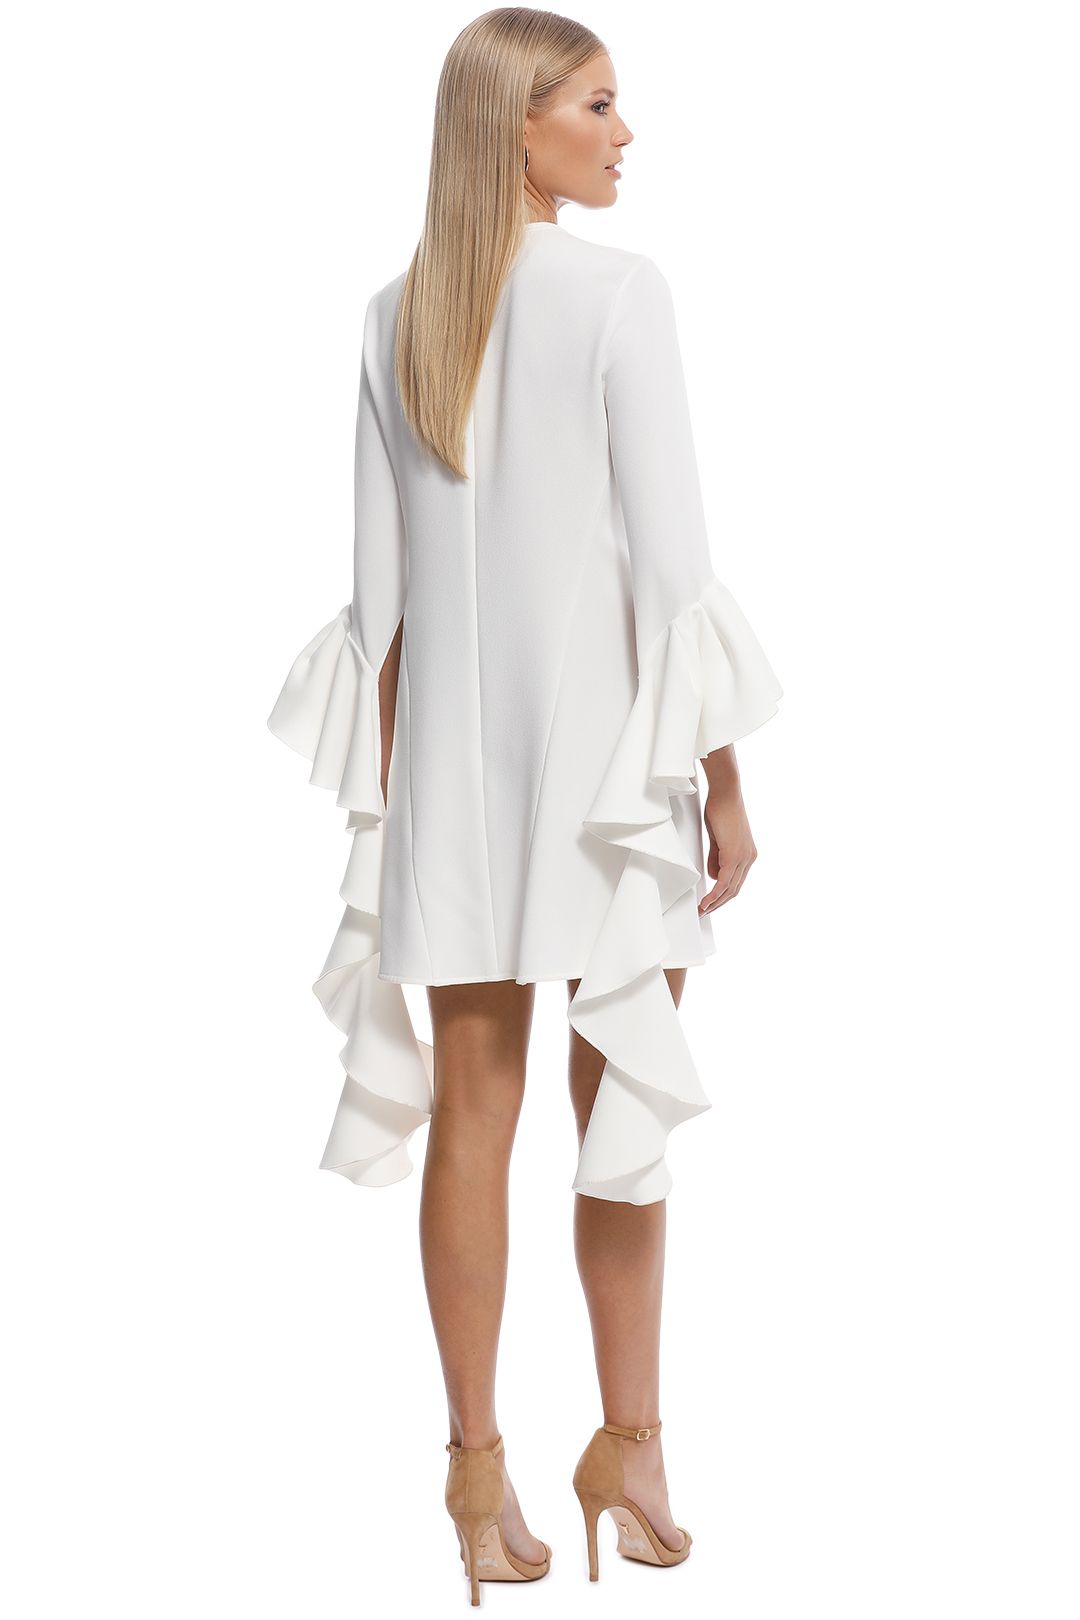 Ellery - Kilkenny Frill Sleeve Mini Dress - Ivory - Back